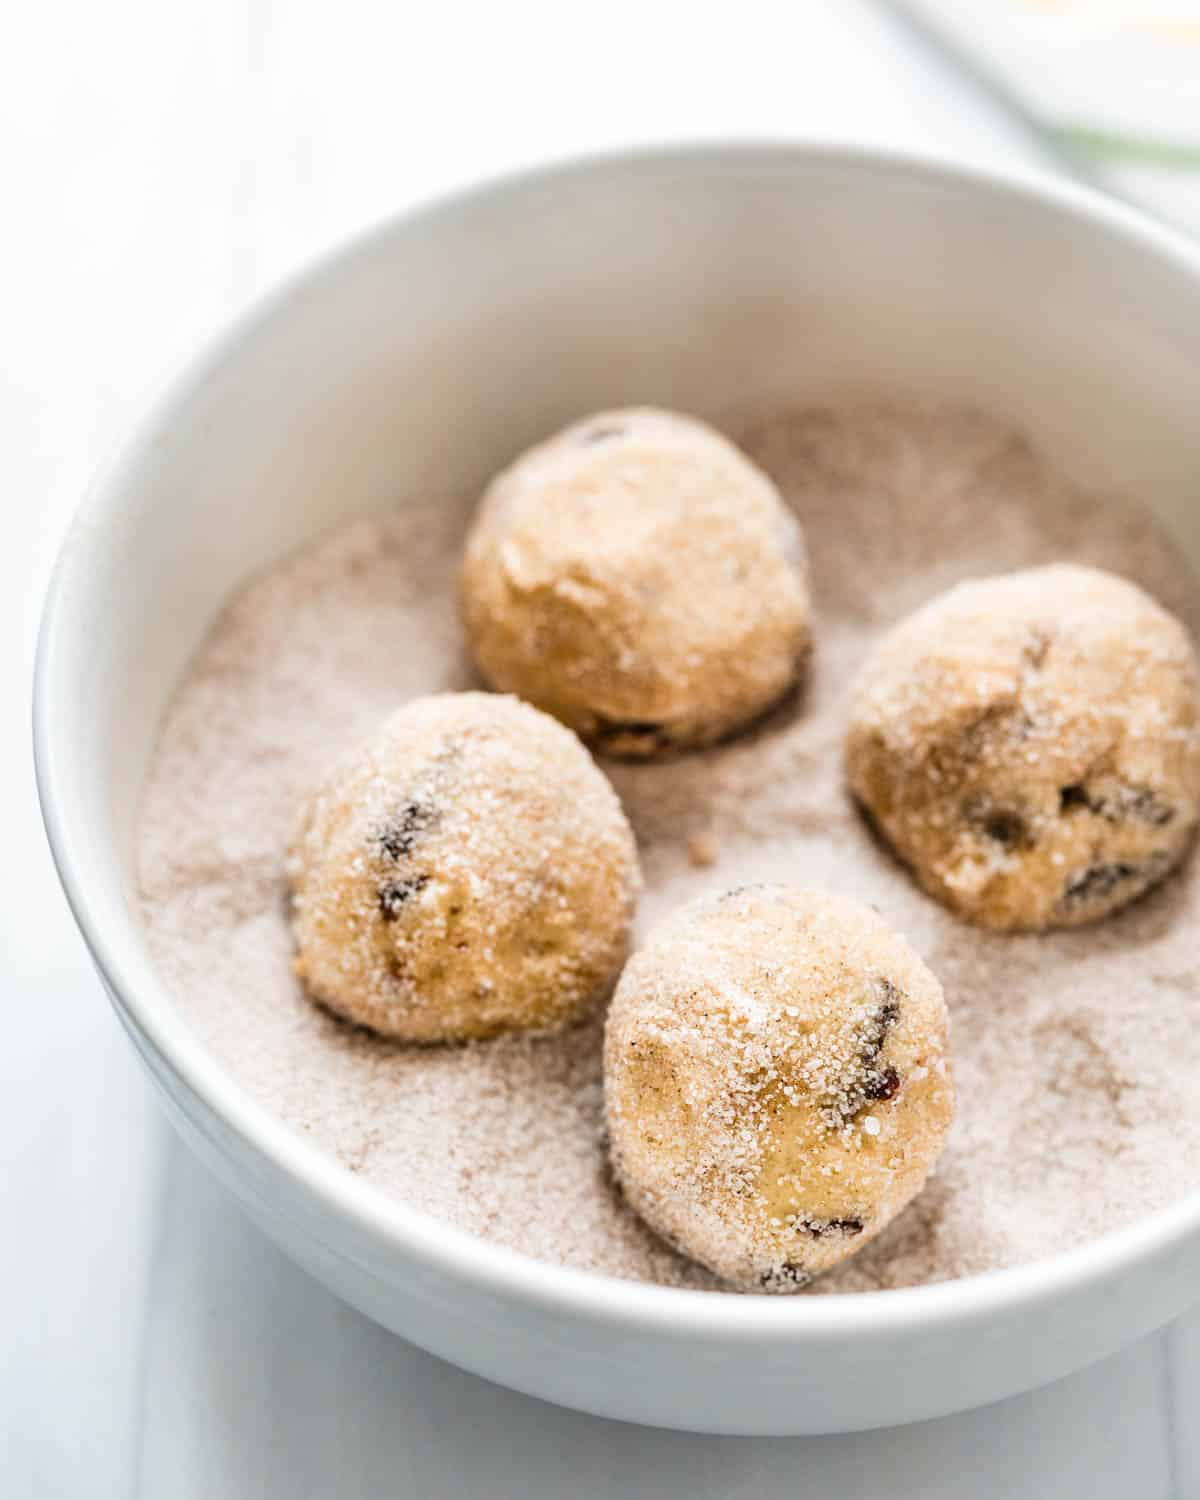 Rolling balls of dough in cardamom spiced sugar.